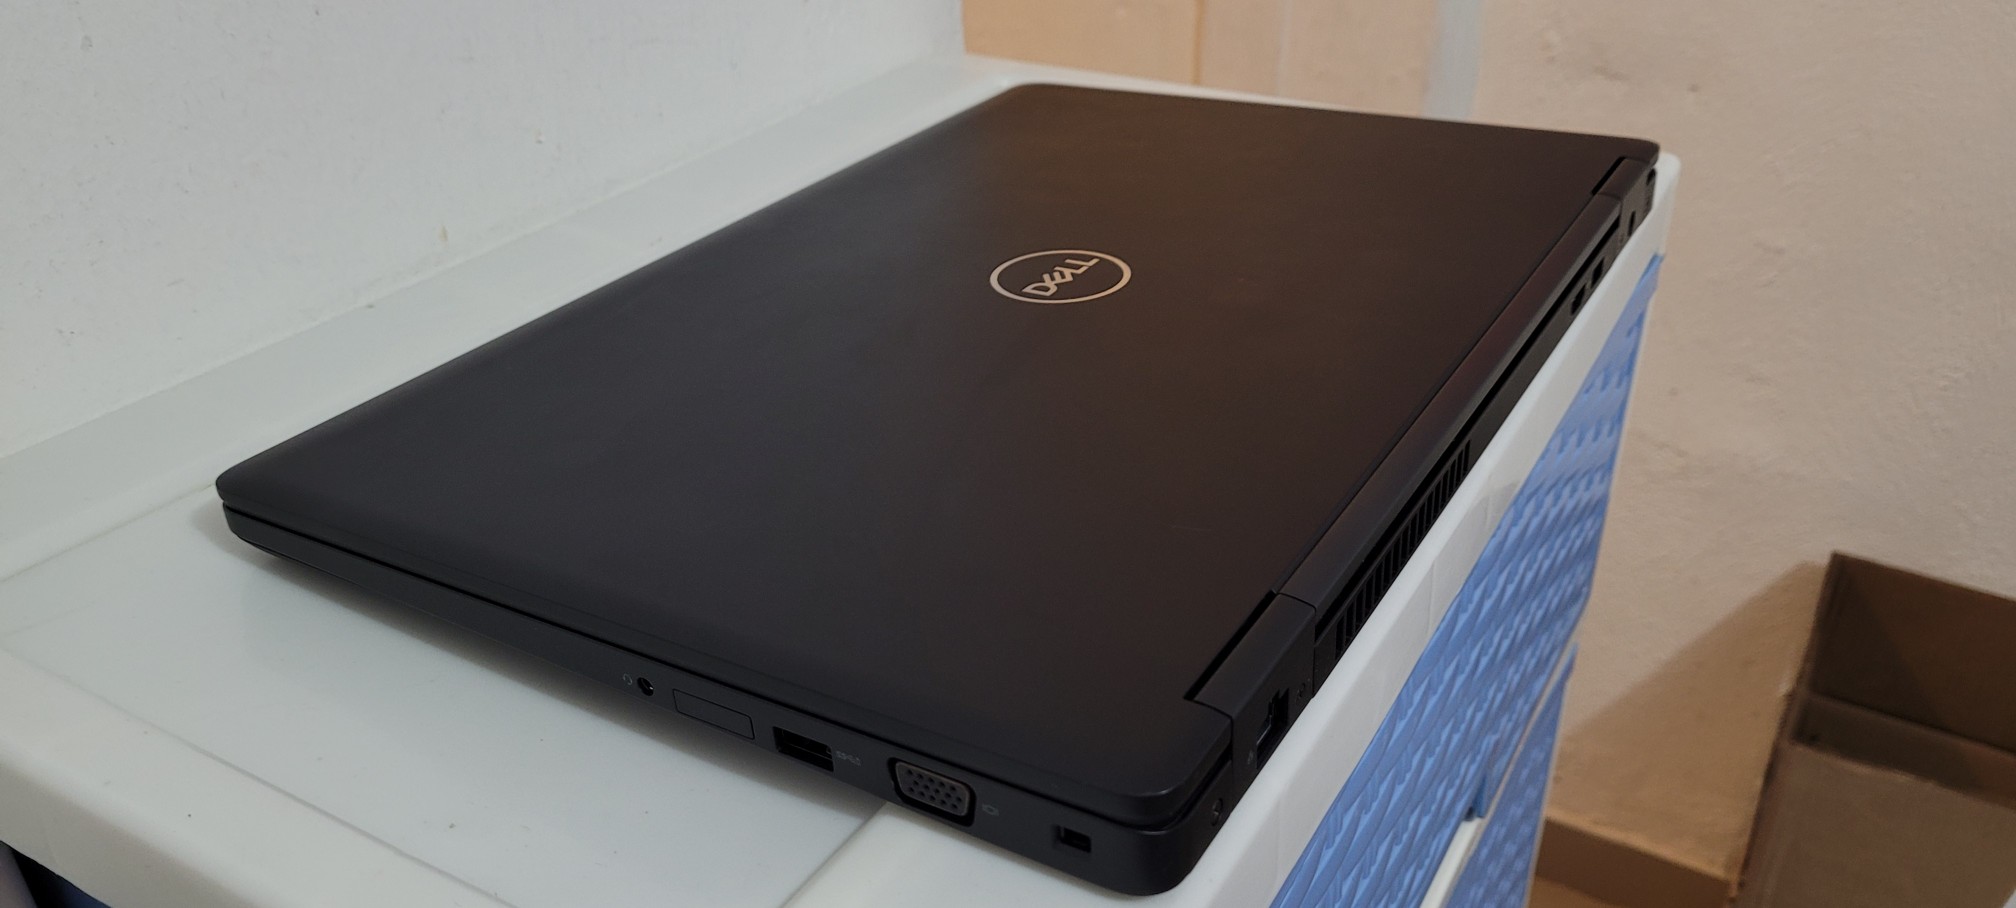 computadoras y laptops - Dell 5570 17 Pulg Core i7 Ram 16gb ddr4 Video intel 8gb Y Aty Radeon R7 2gb 2